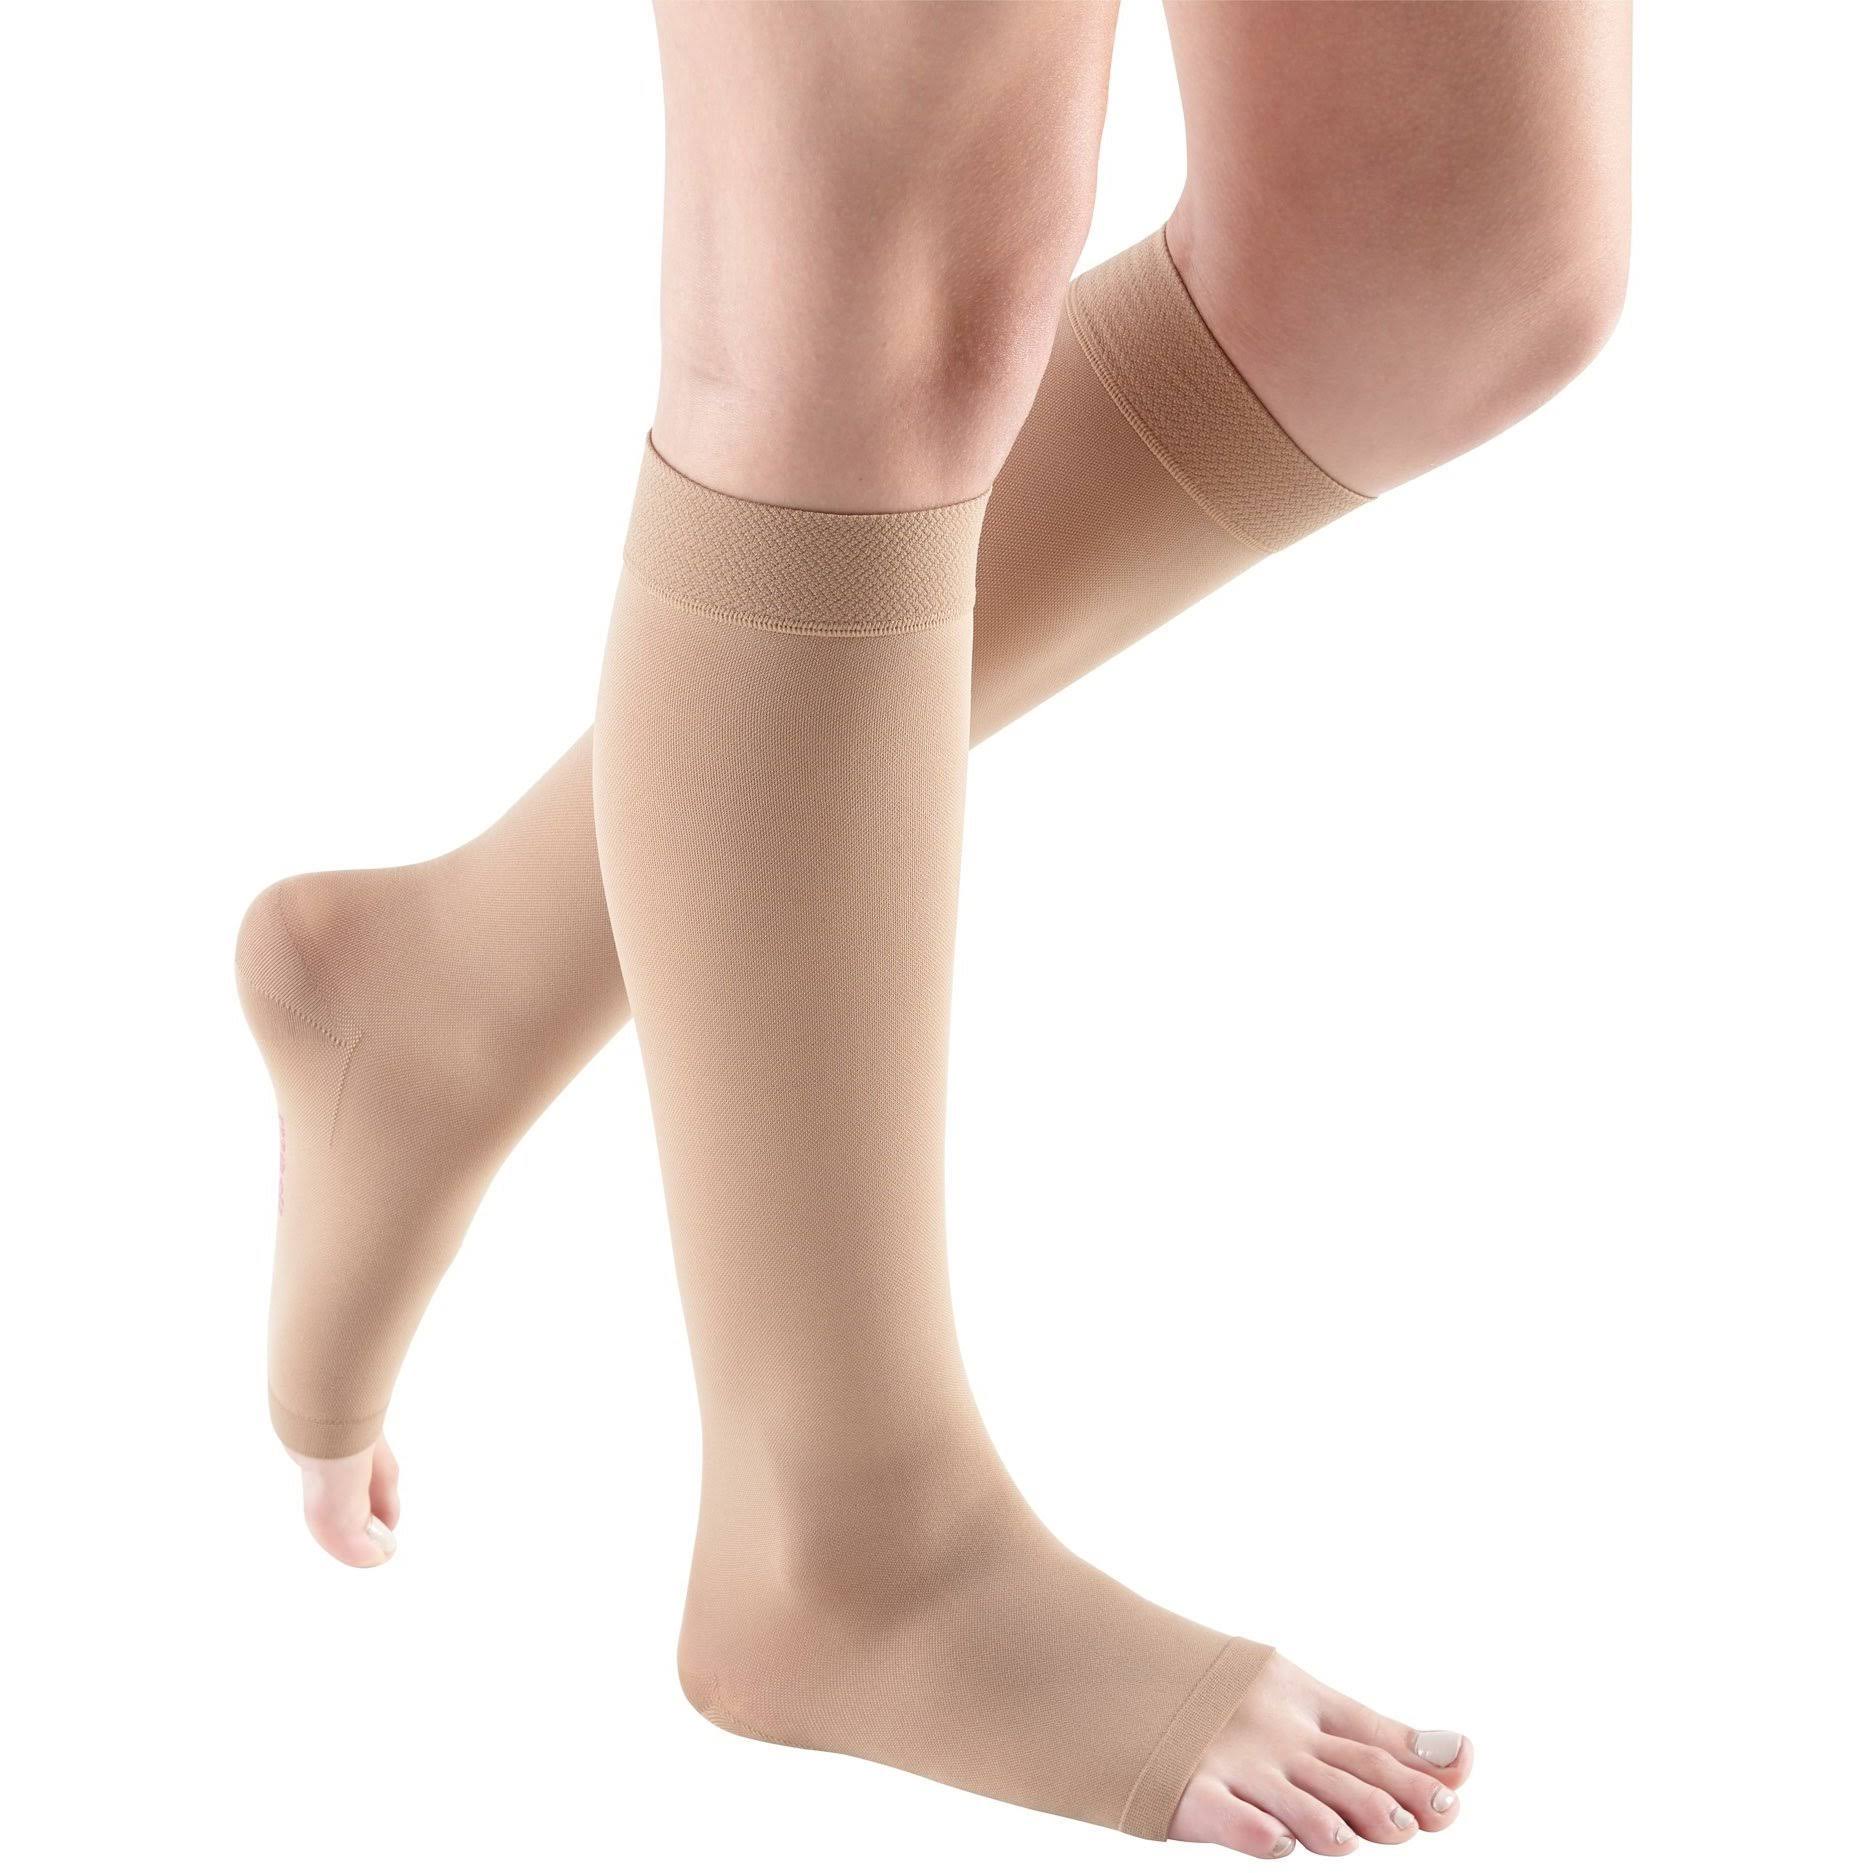 mediven Comfort Calf High Compression Stockings - Natural, Closed Toe, 20-30 mmHg